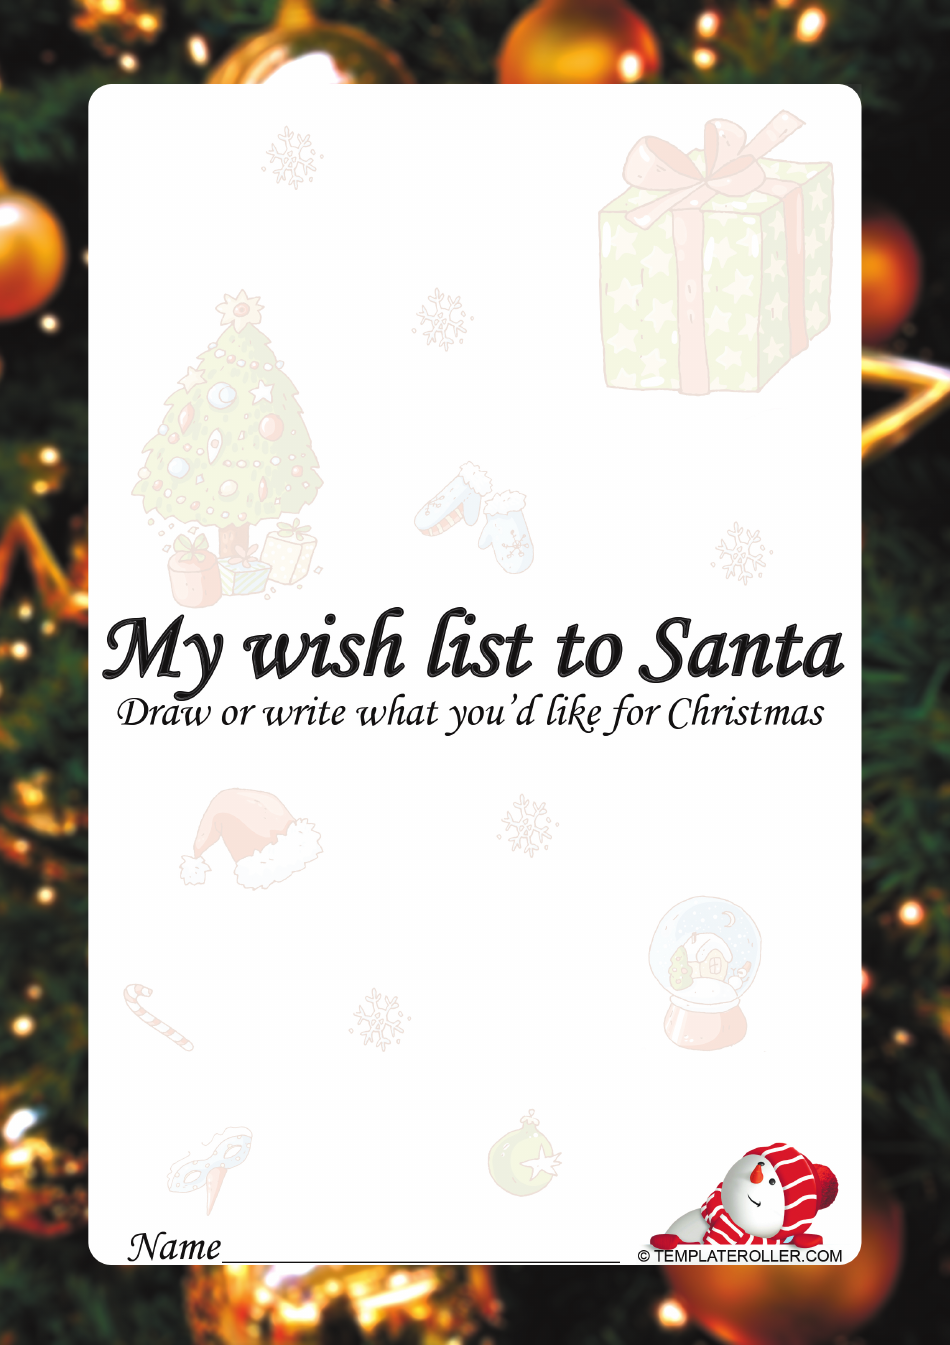 Christmas Wish List Template - Festive and Joyous Celebration Atmosphere